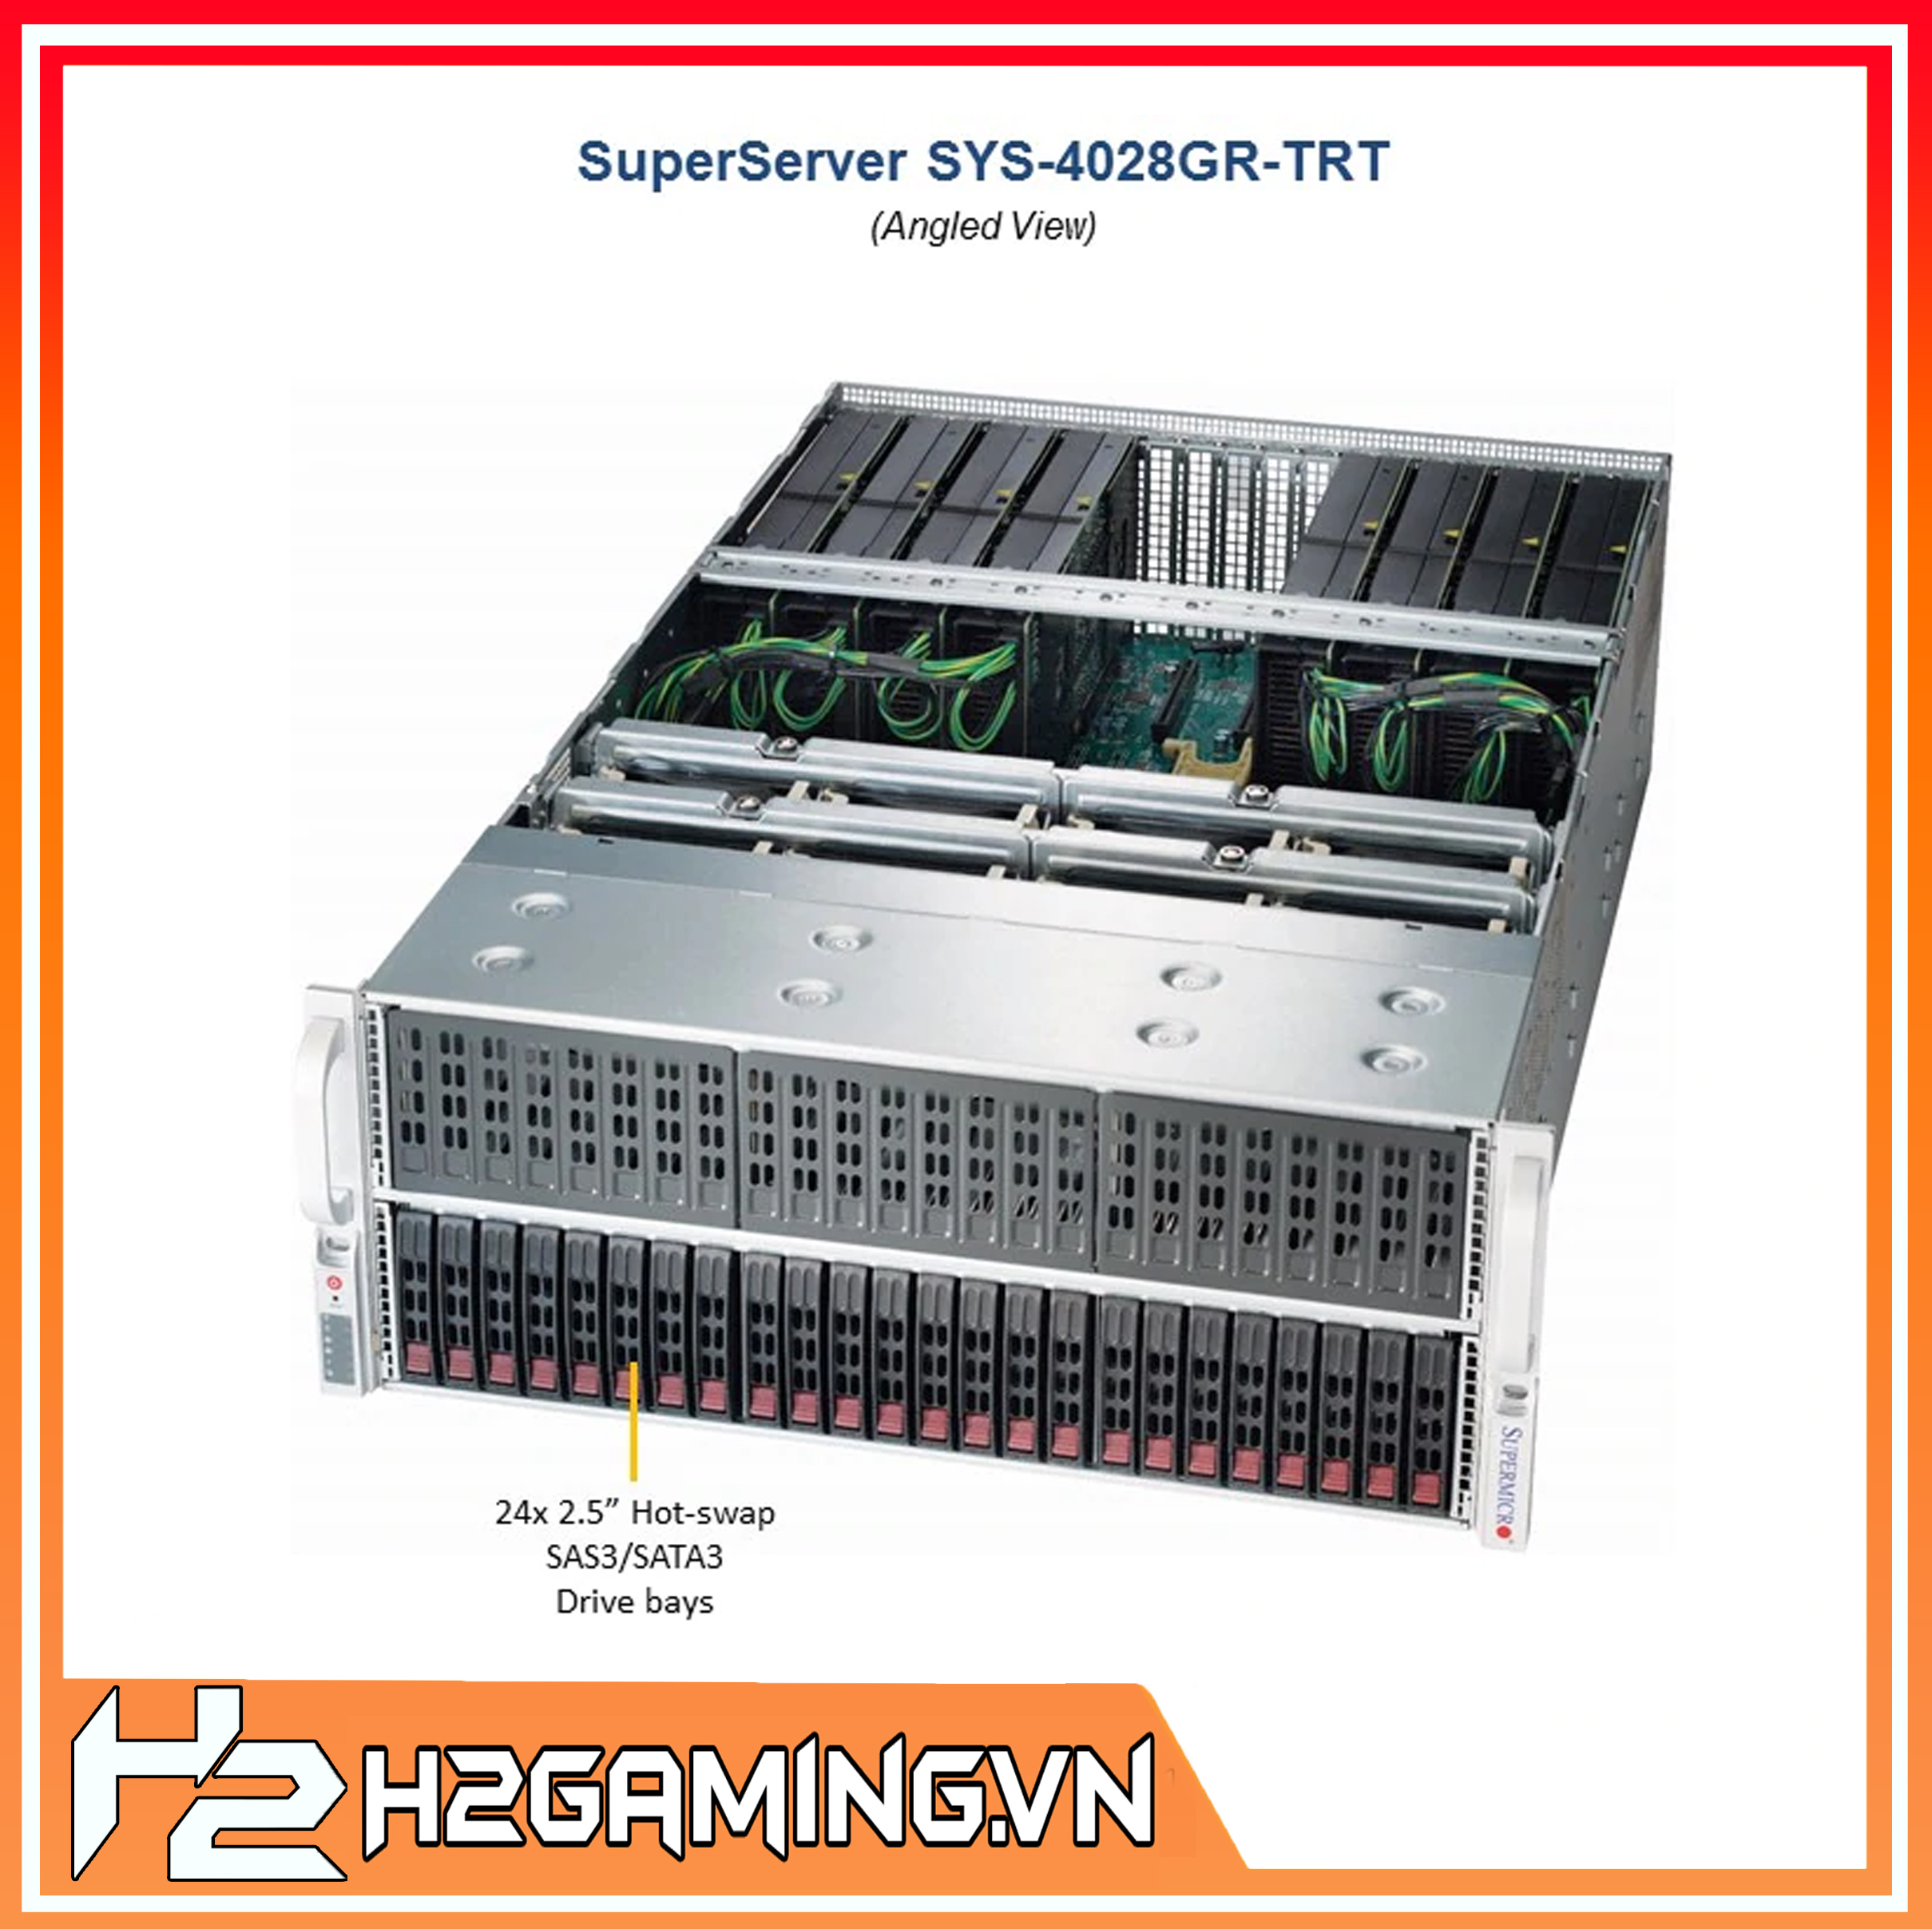 SYS-4028GR-TRT